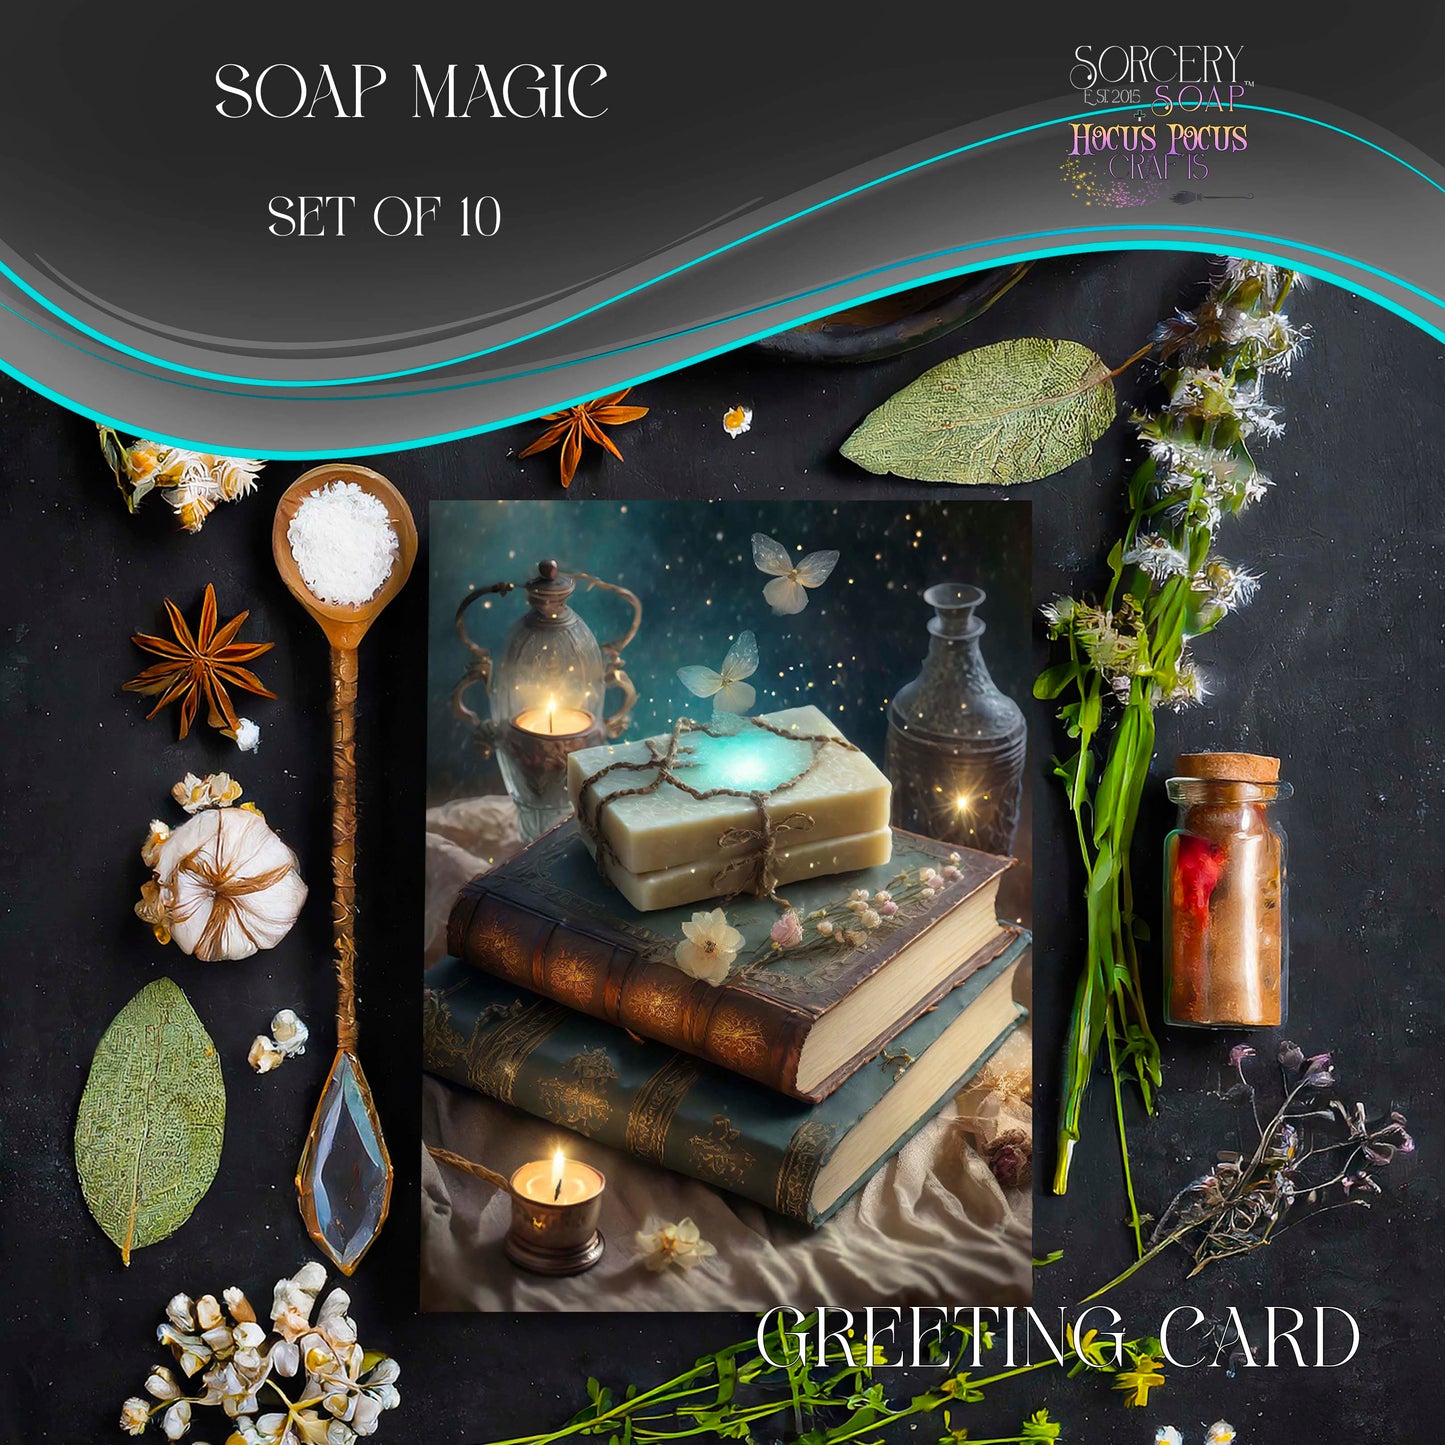 Soap Magic Greeting Card